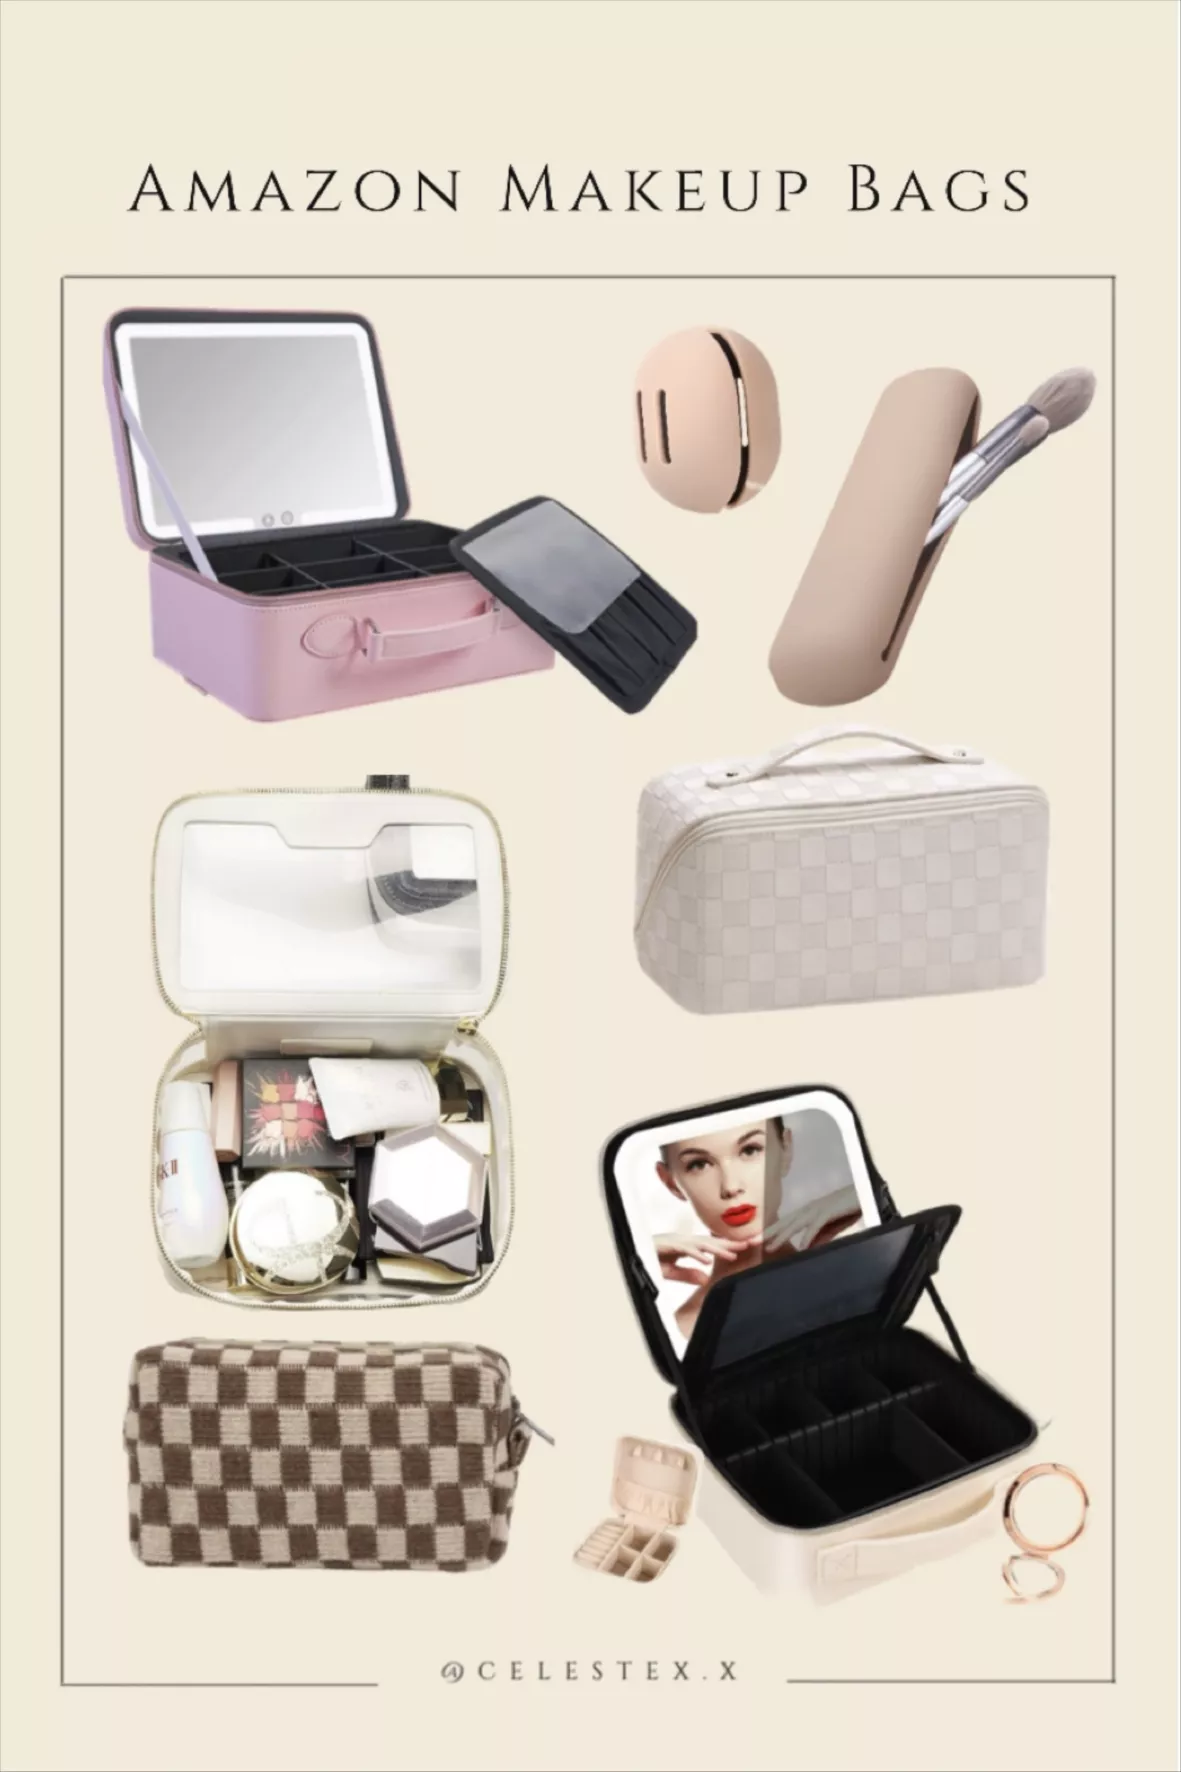 Rownyeon Clear Makeup Case Toiletry Bag Multipurpose Travel Makeup